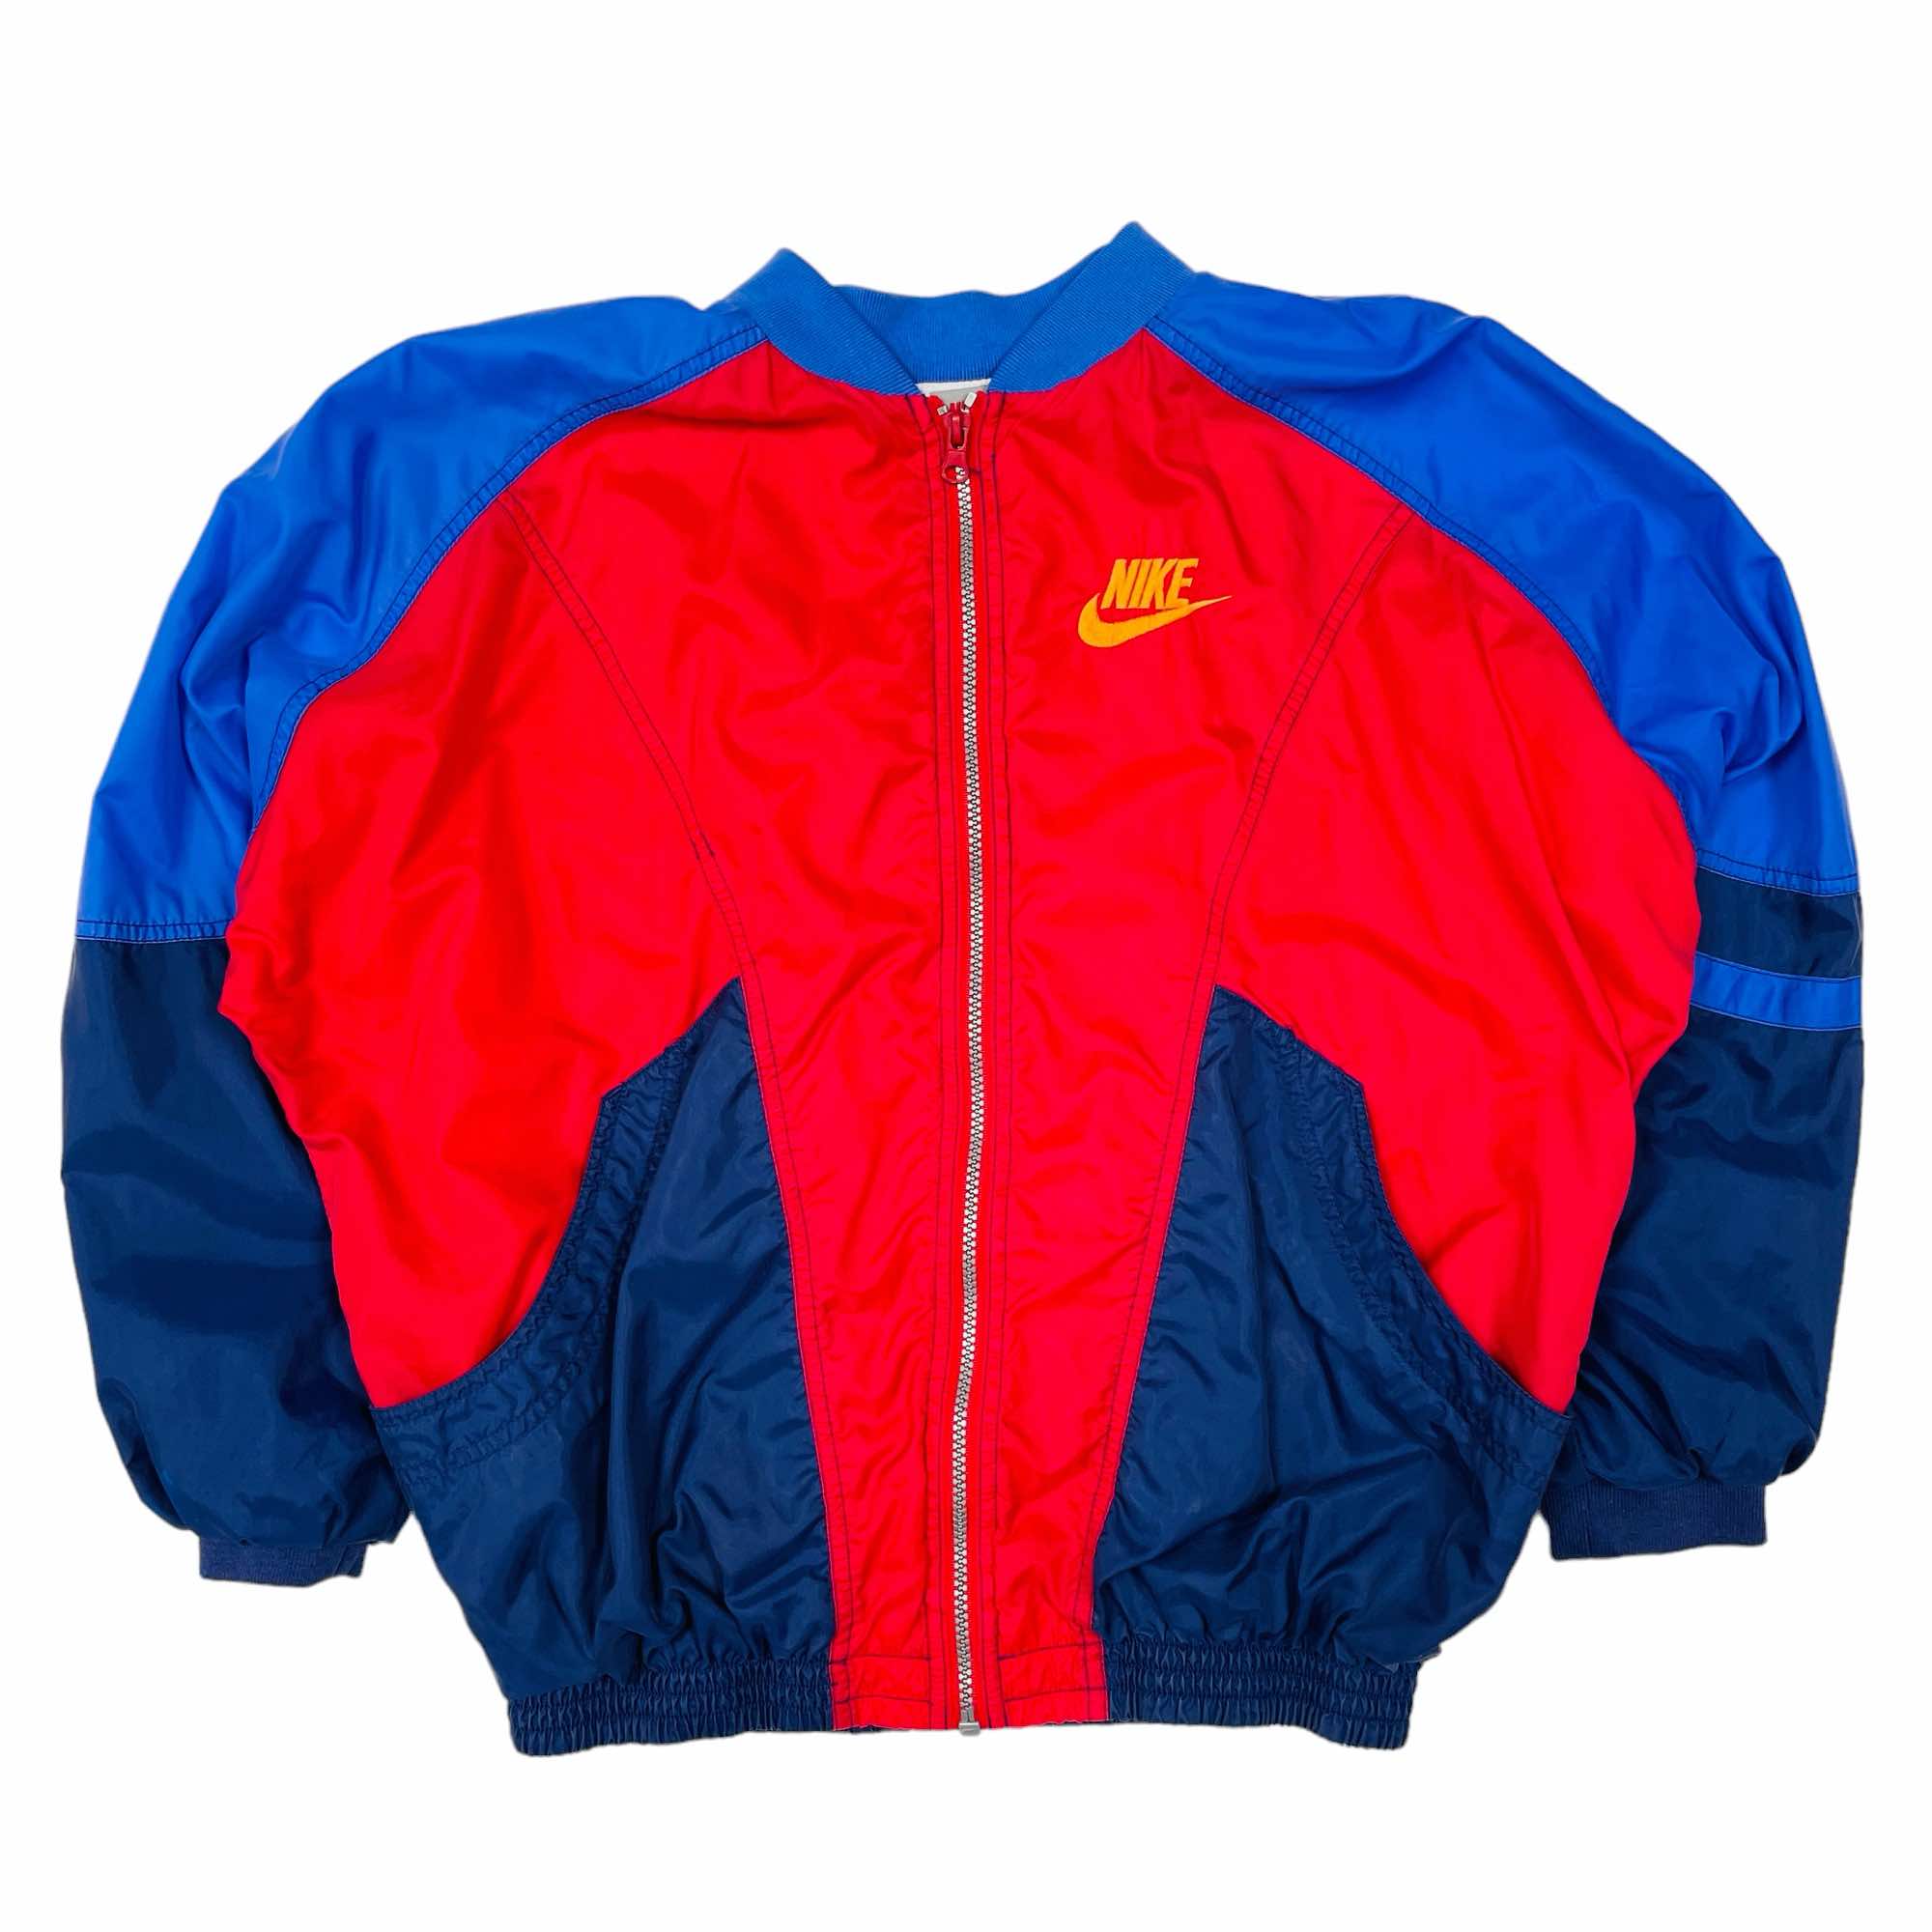 90s Nike Track Jacket - Small